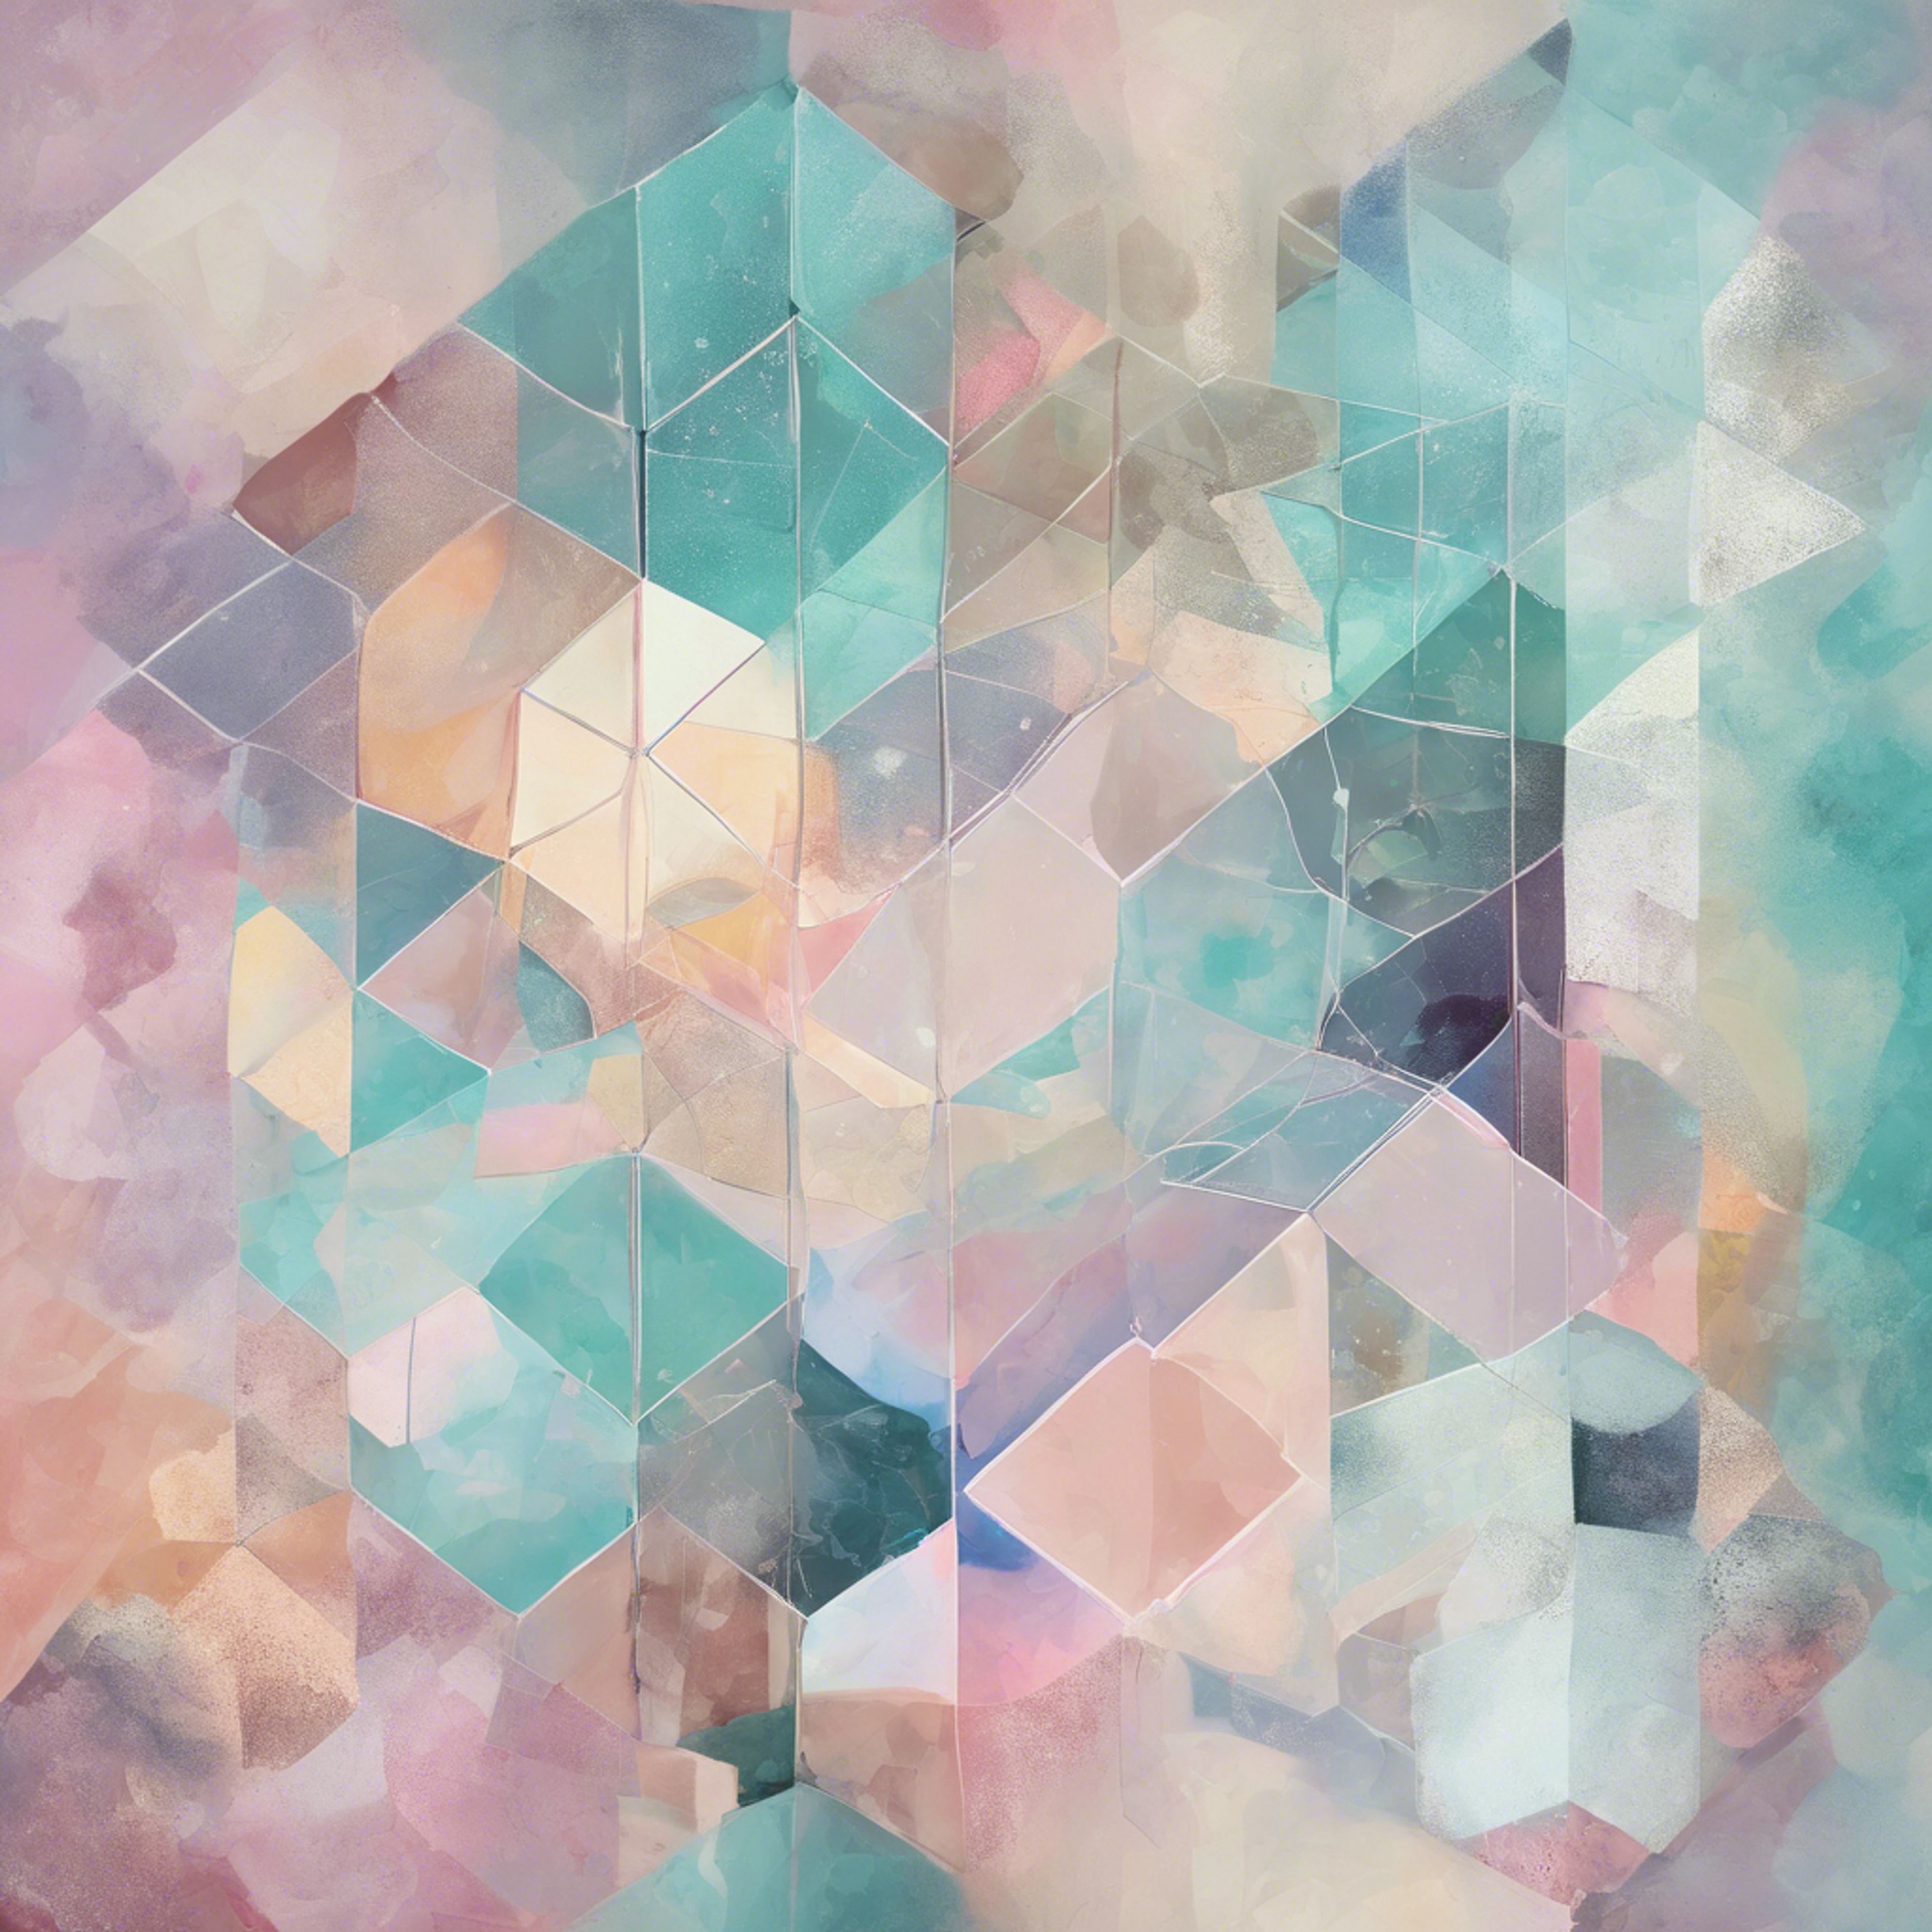 A cool pastel colored abstract painting emphasizing geometric patterns. Дэлгэцийн зураг[4610bdb5de564f779c91]